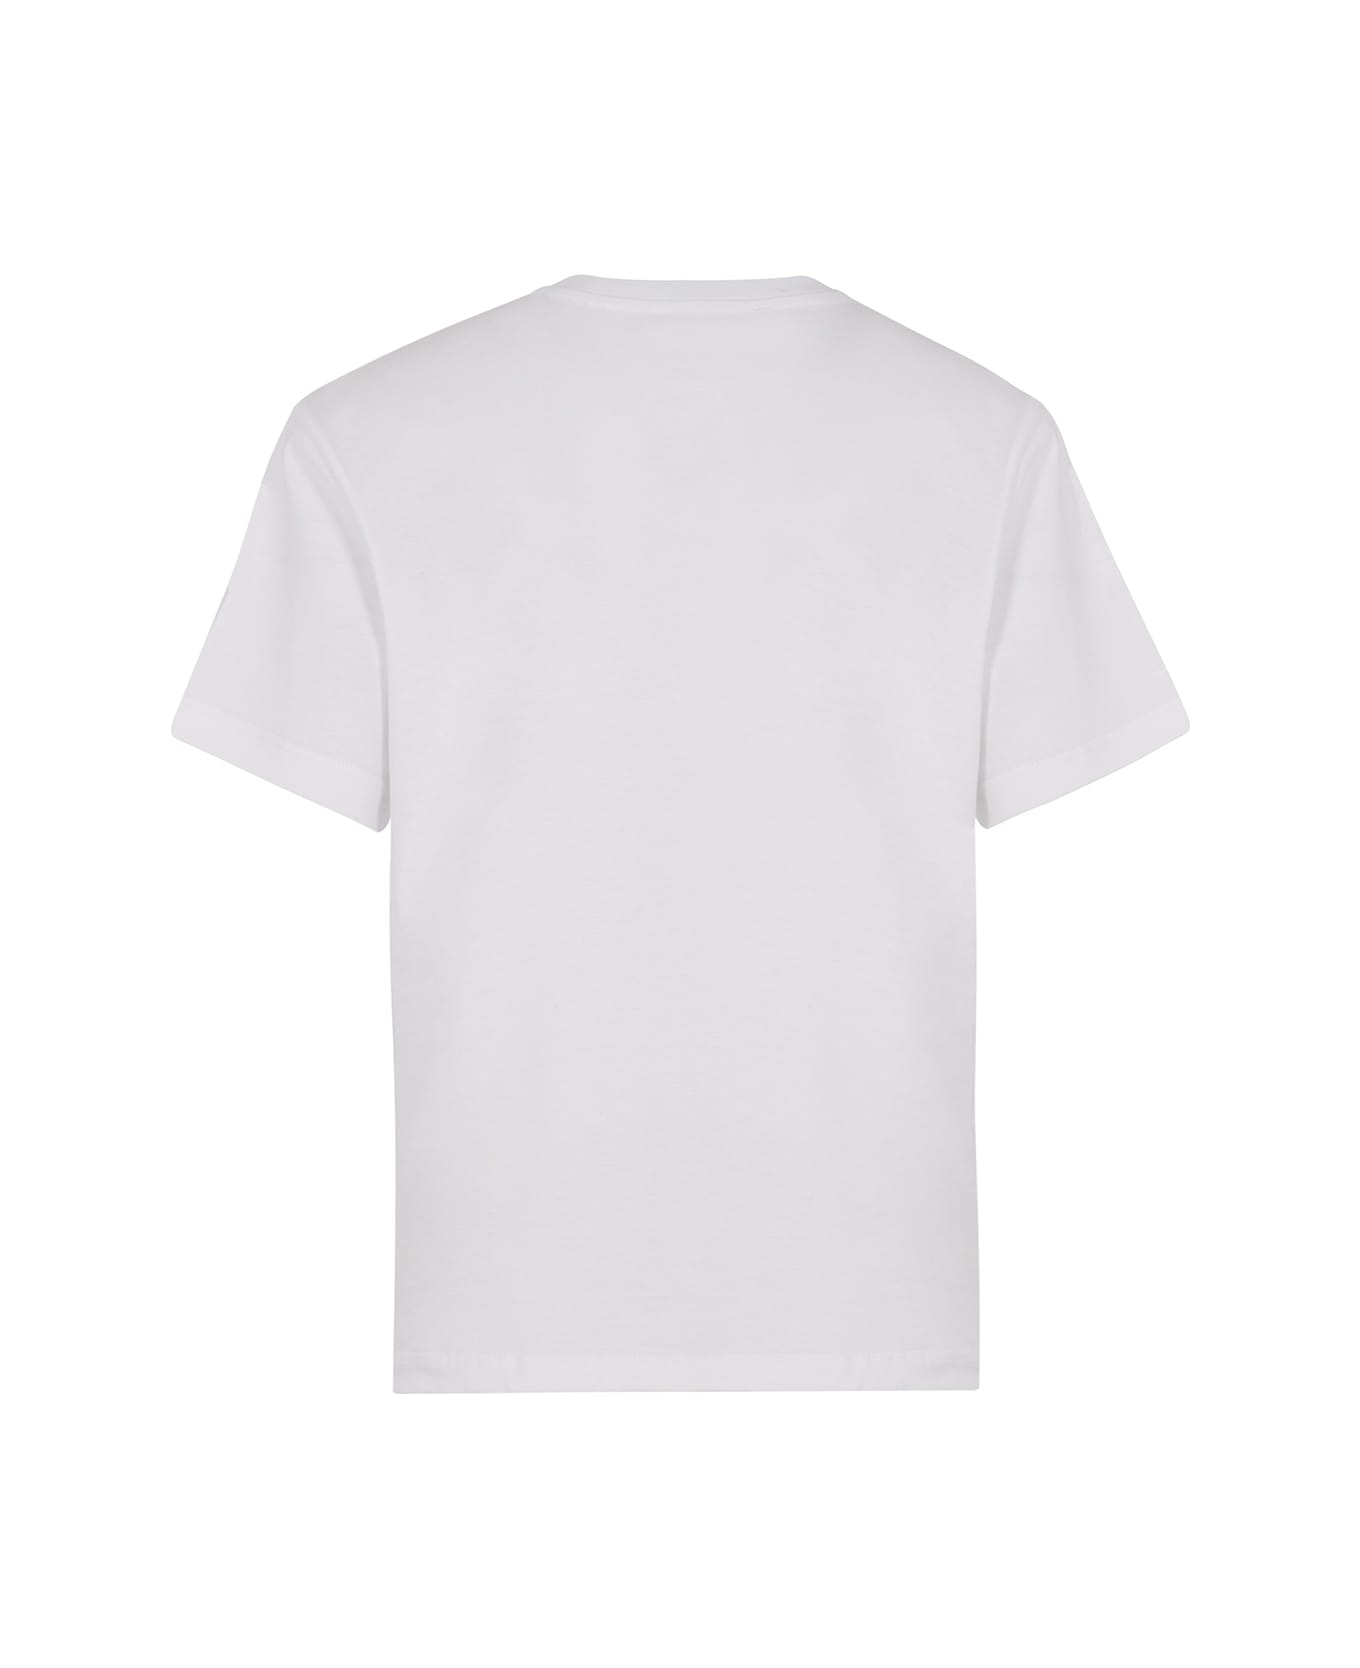 MSGM T-shirt With Print - White